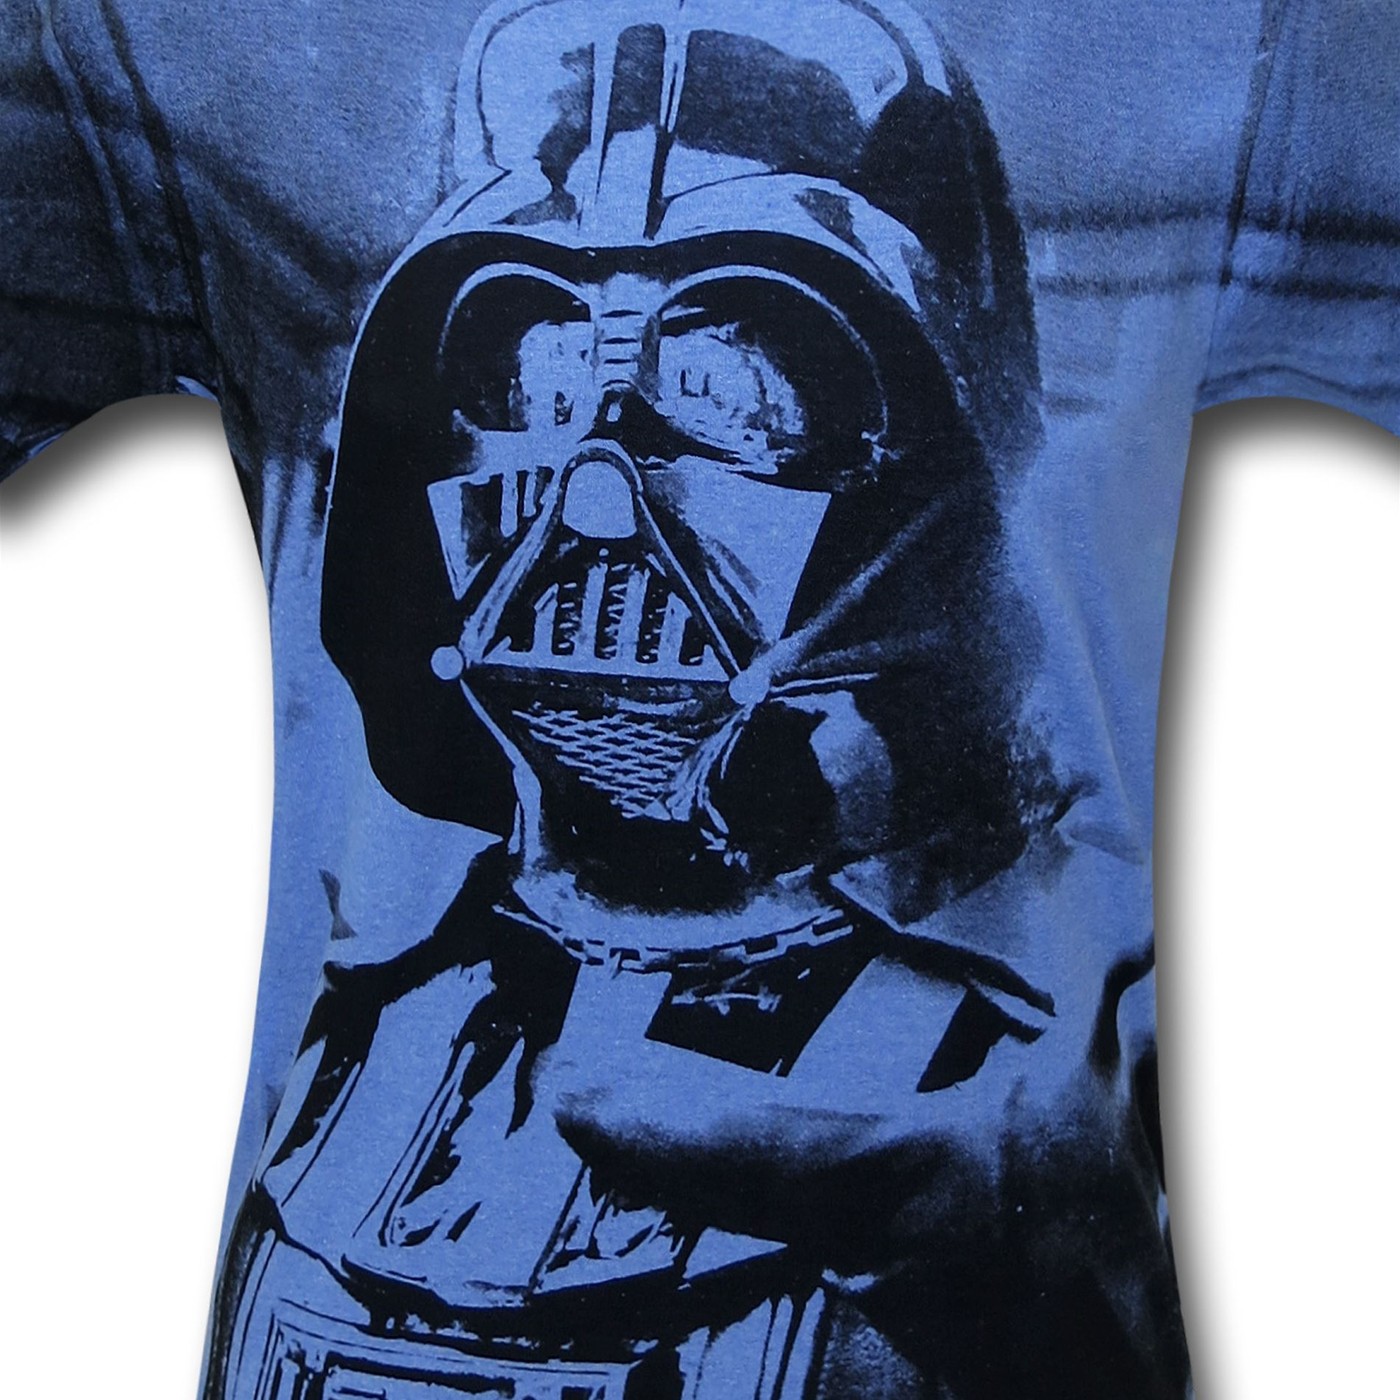 Star Wars Vader Force Choke Sublimated T-Shirt